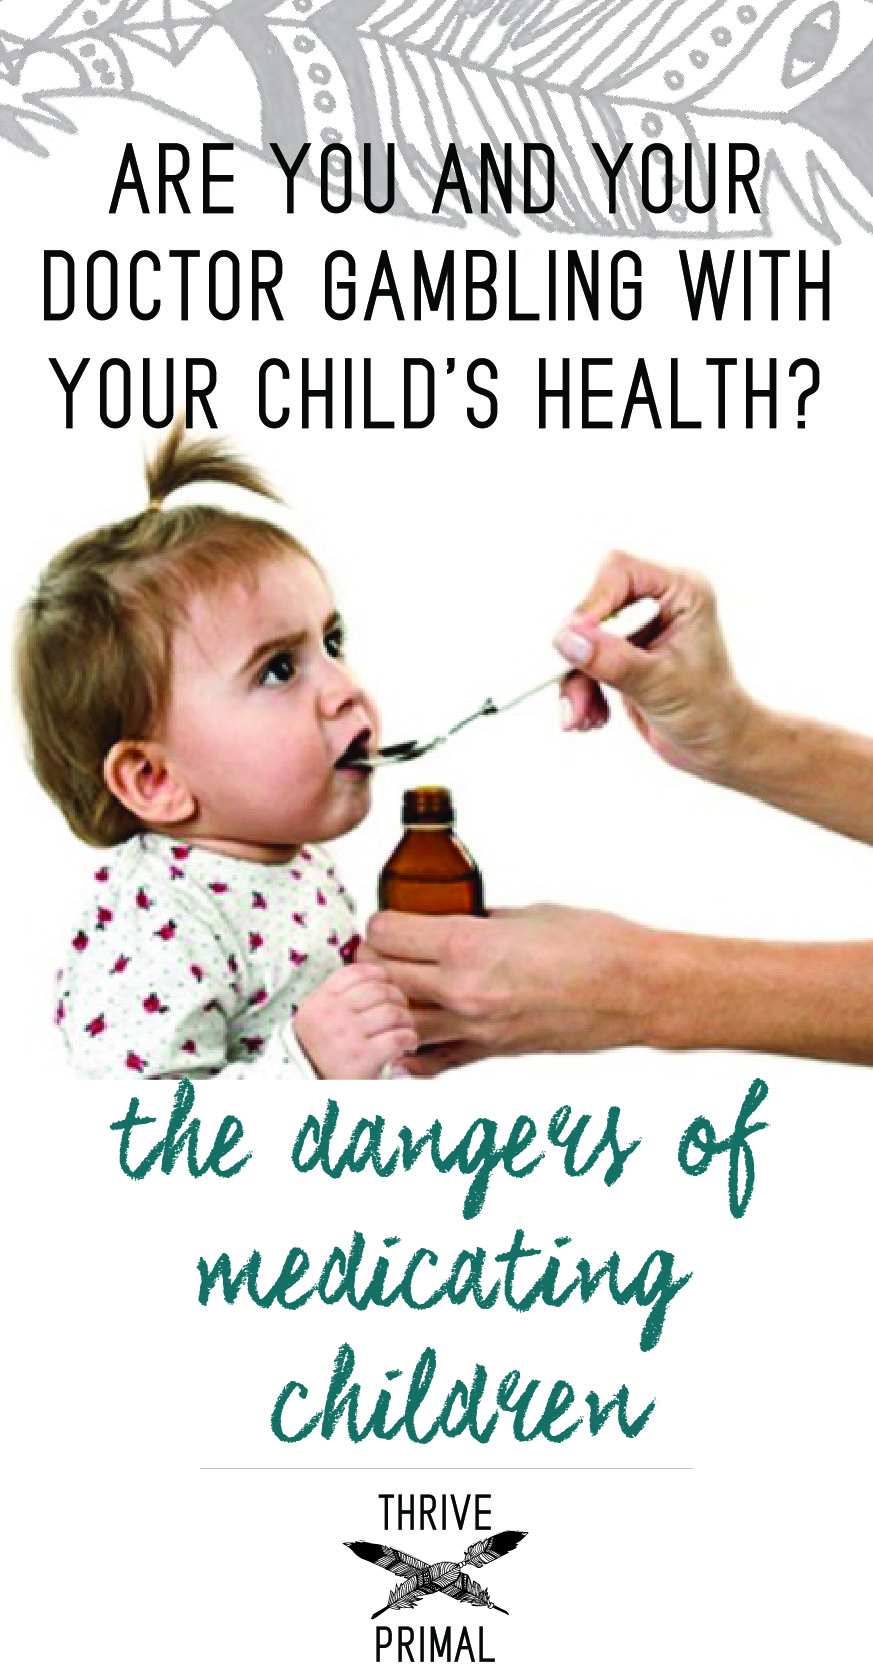 Thrive Primal - dangers of medicating children